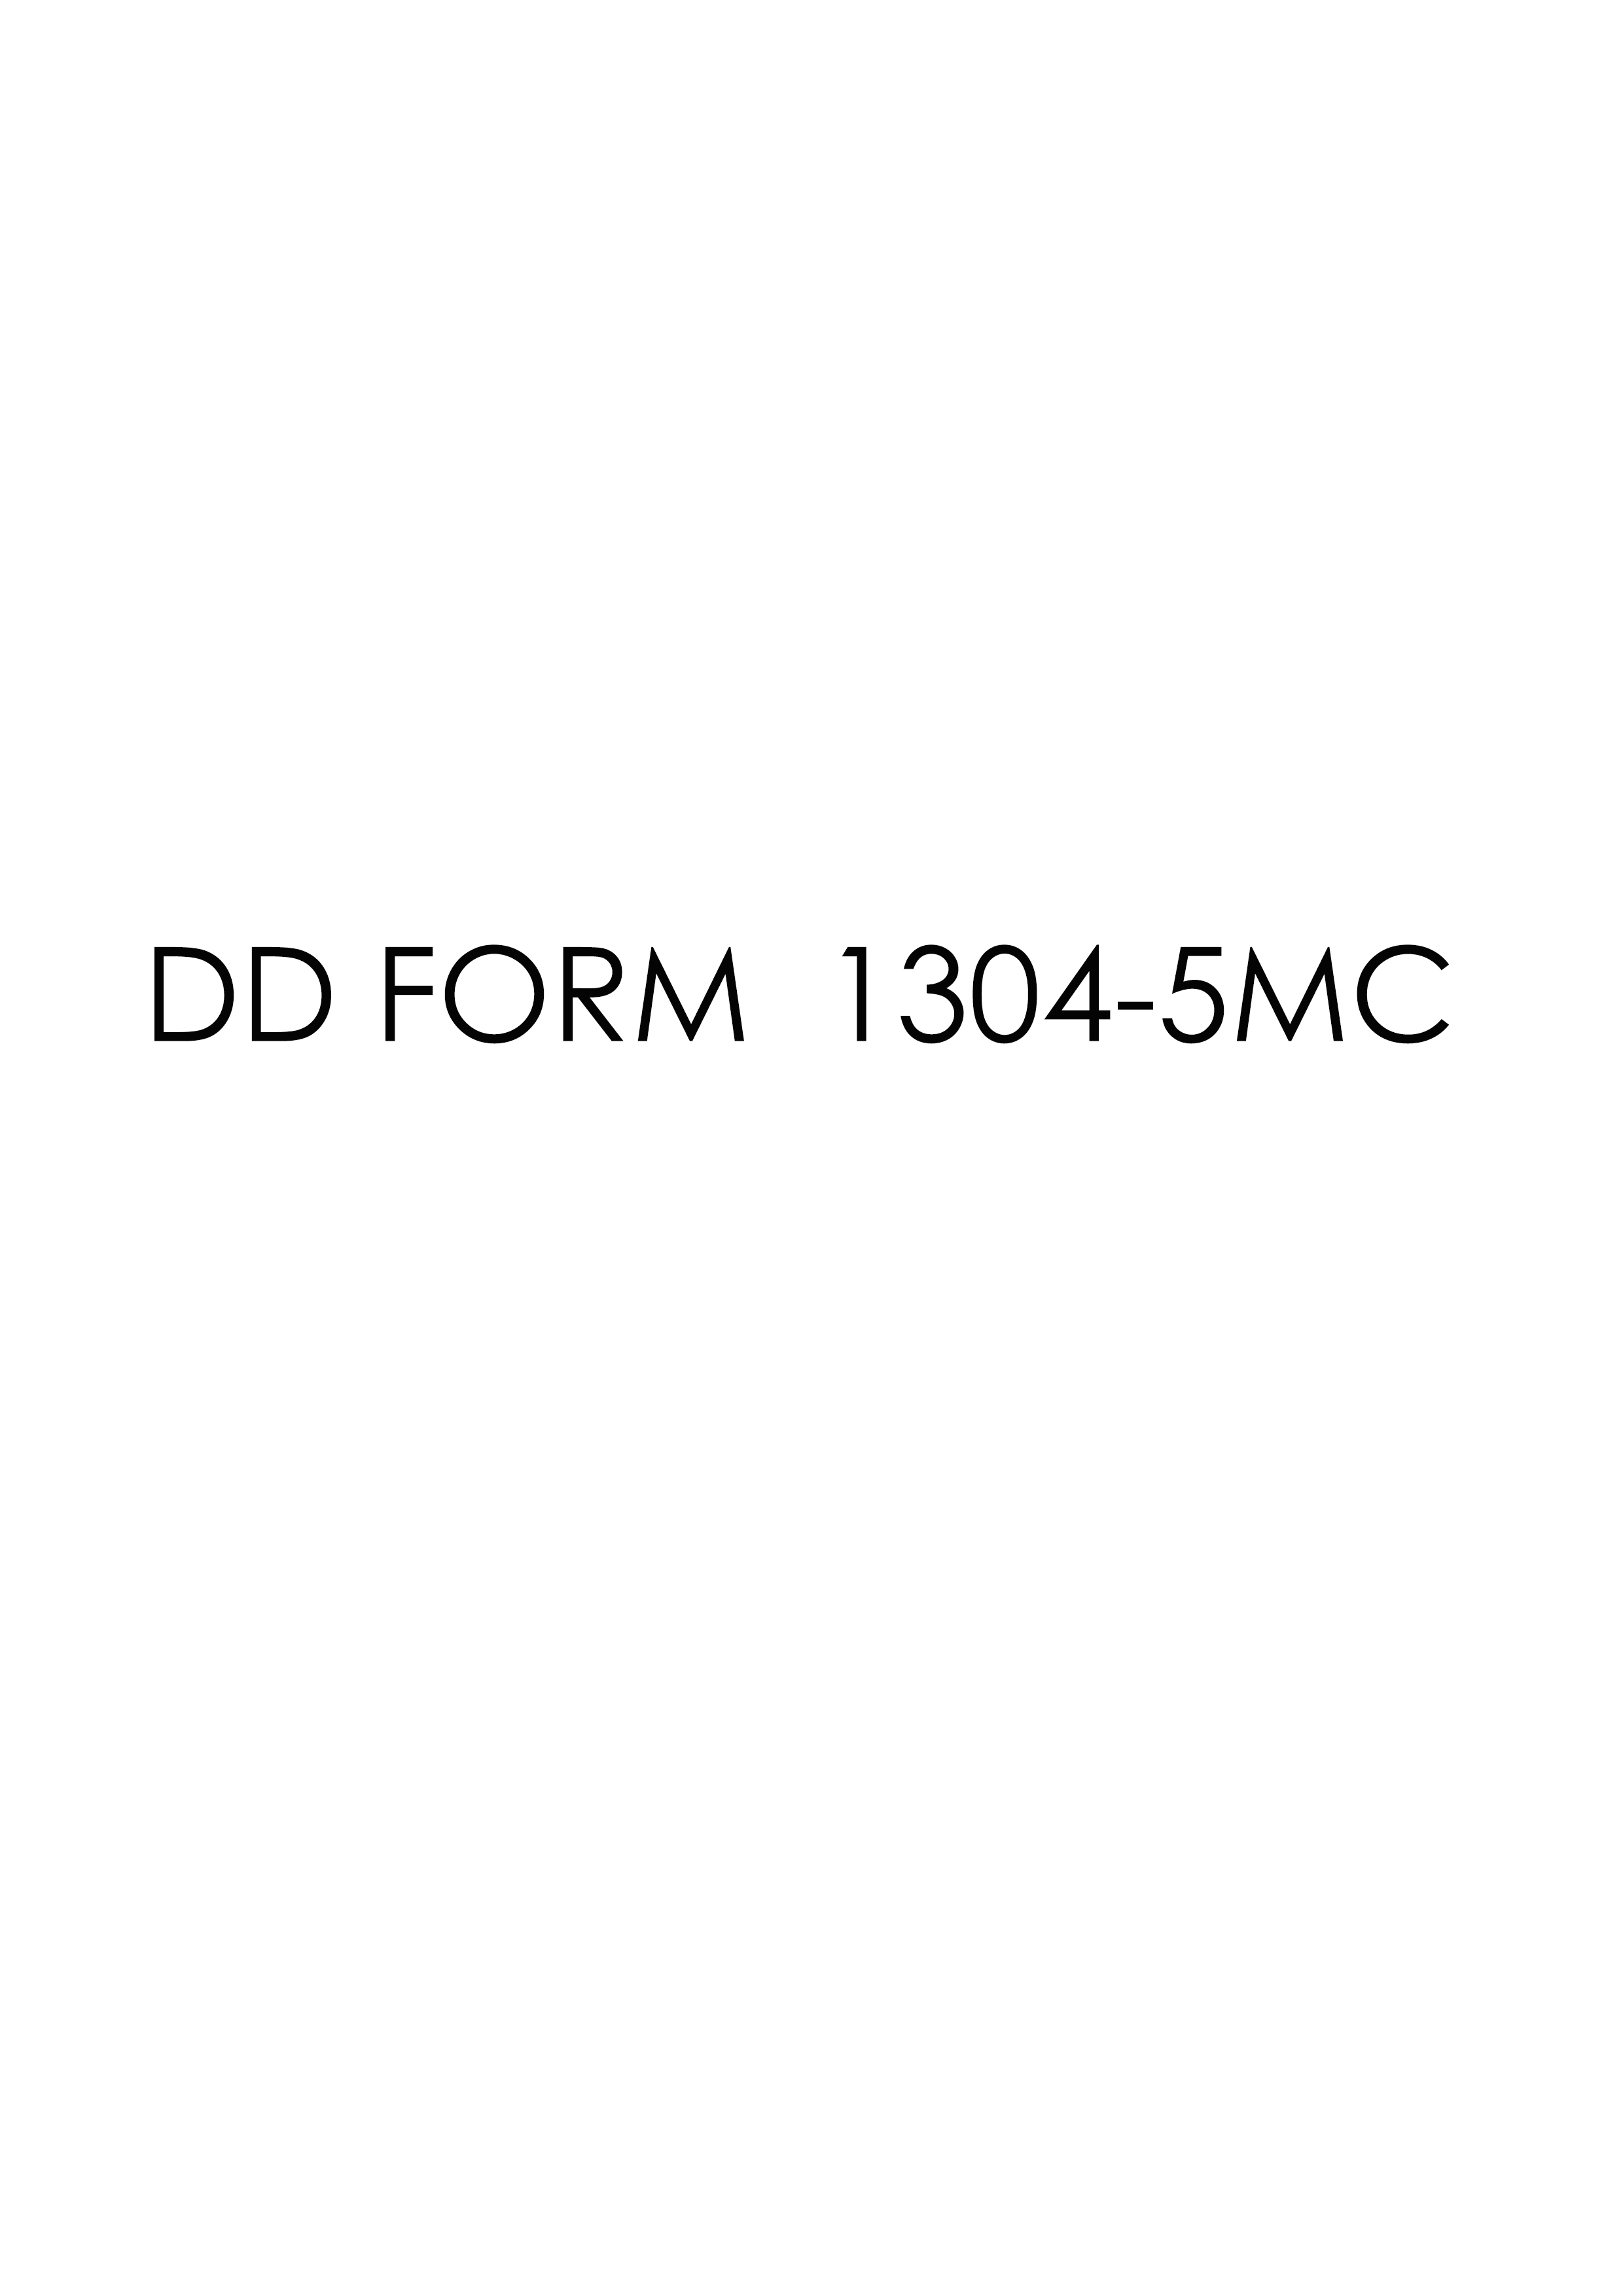 dd Form 1304-5MC fillable